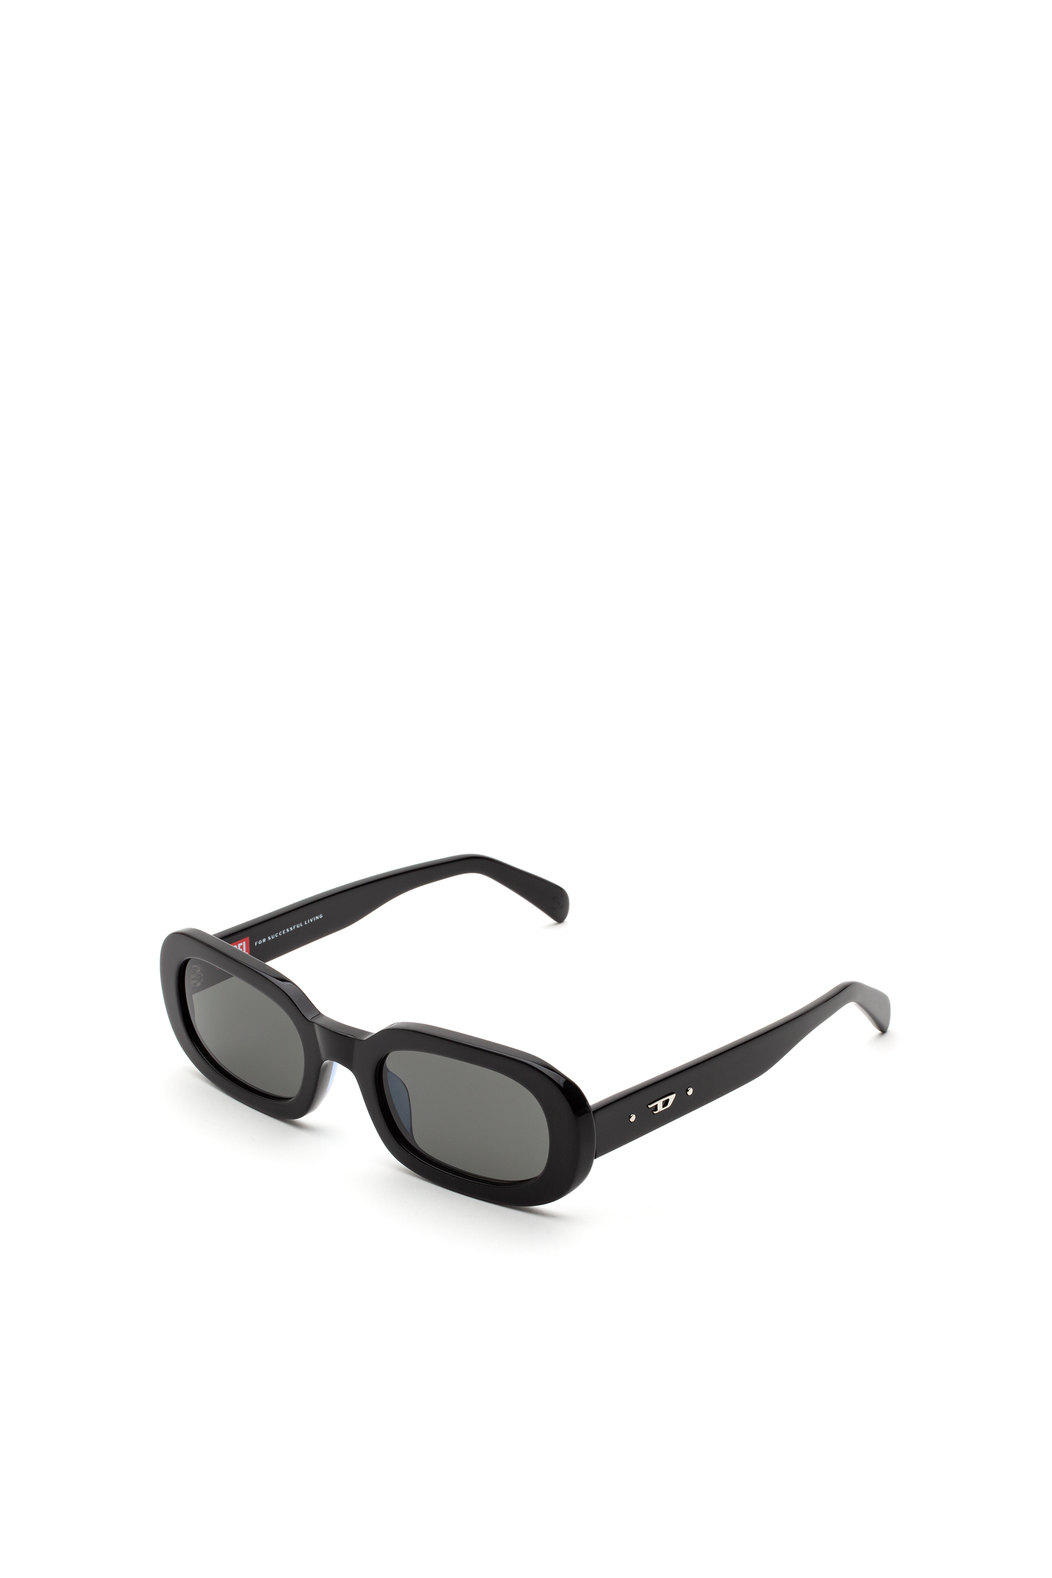 Iconic Oval Sunglasses